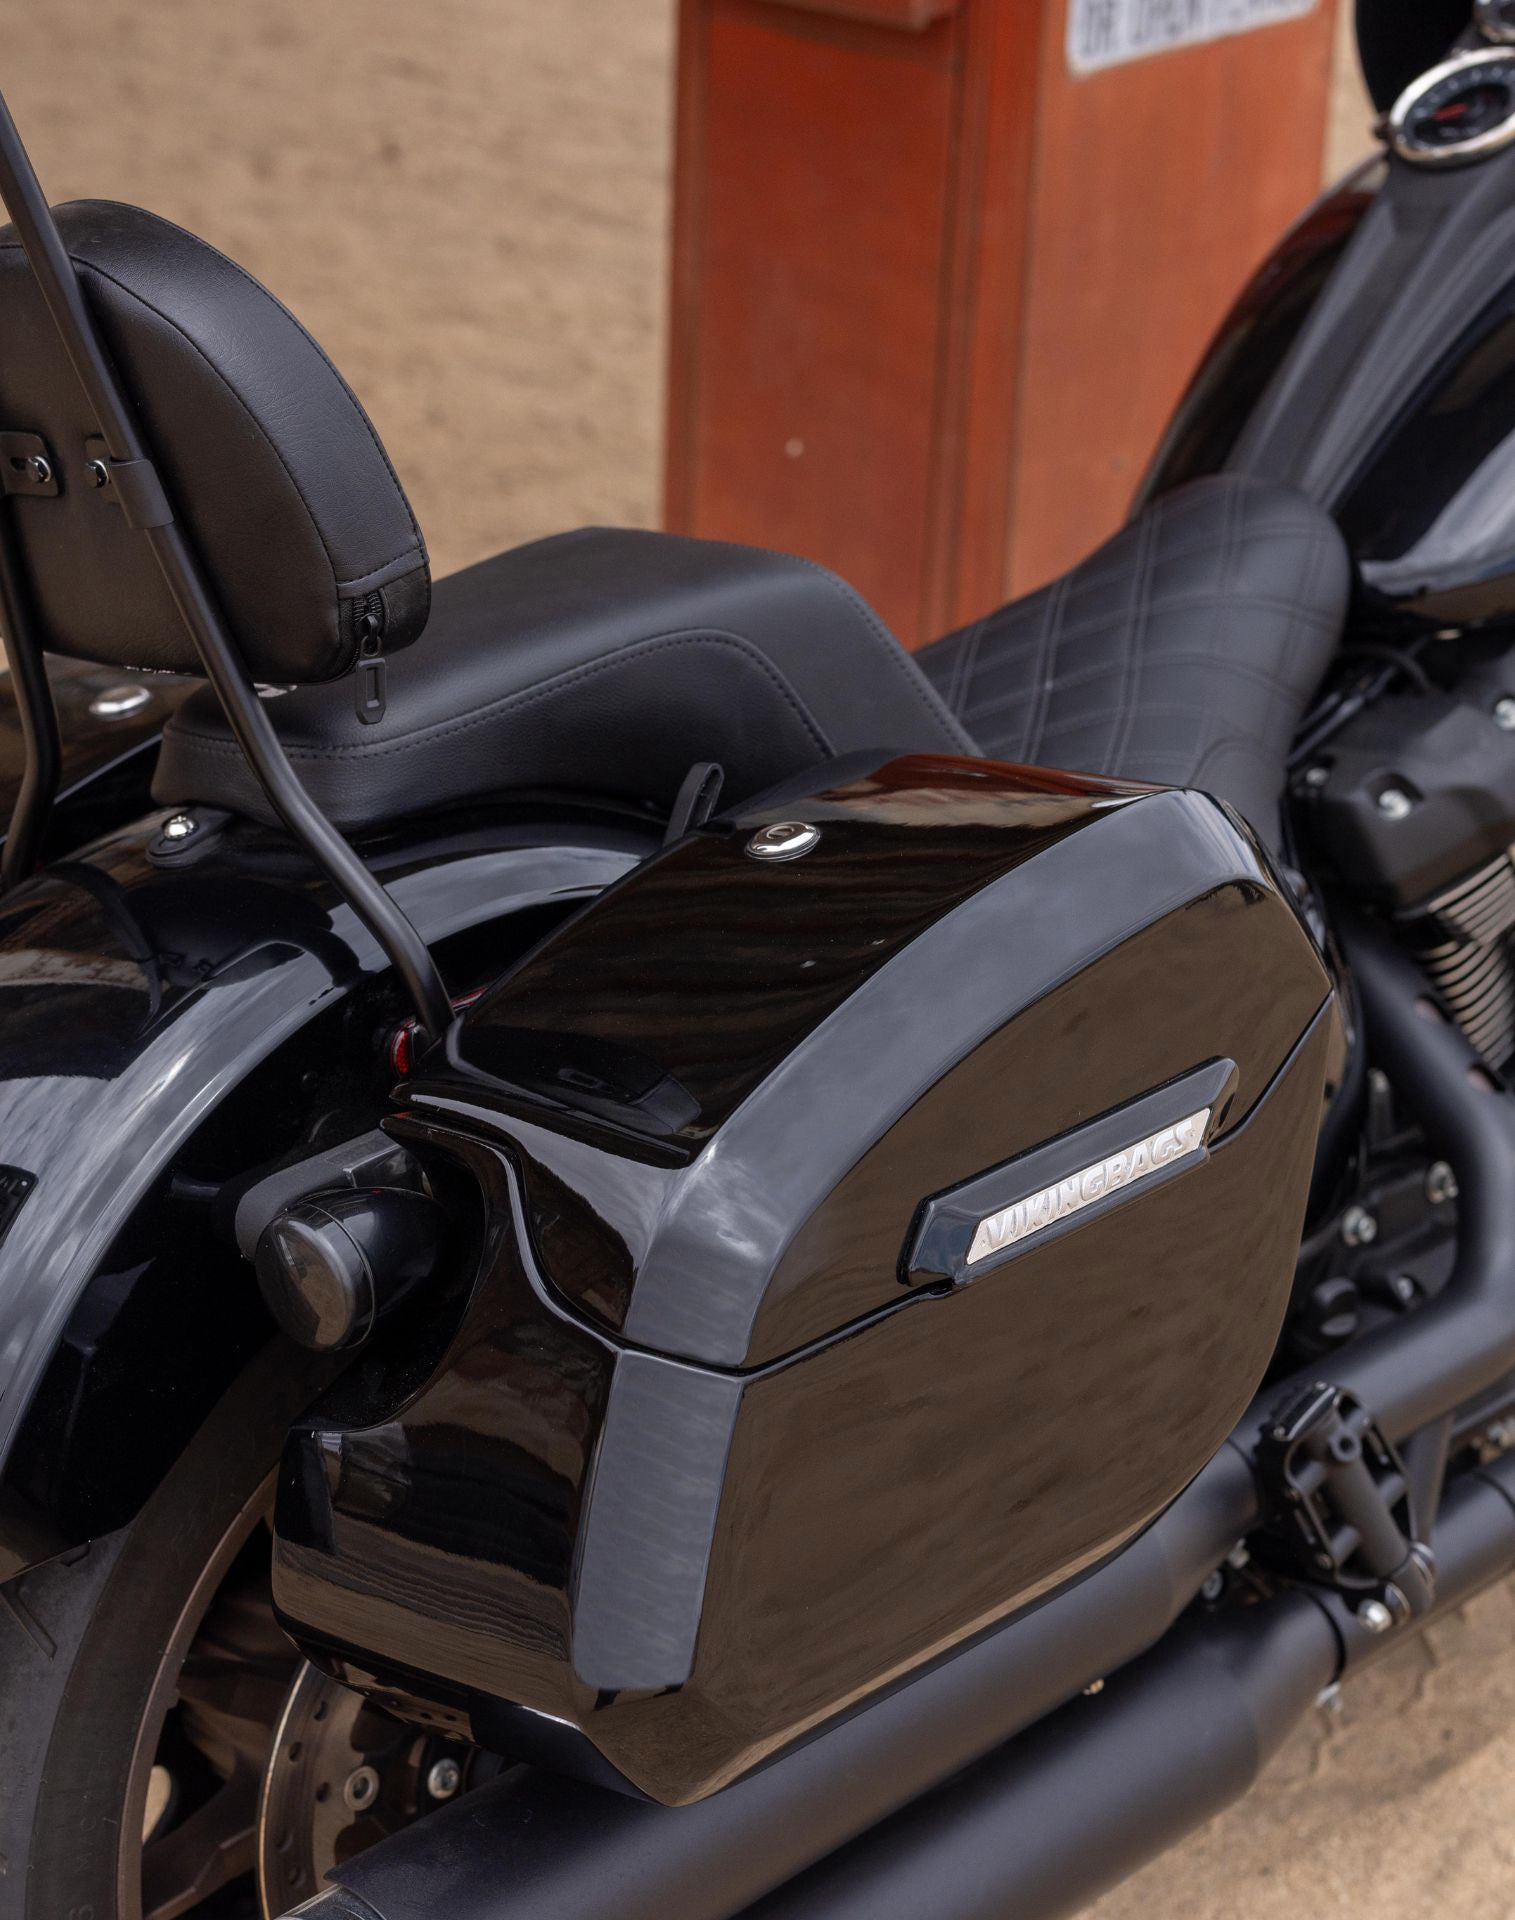 Viking Darkin Large Quick Mount Motorcycle Painted Hard Saddlebags For Harley Davidson Softail Slim are Durable